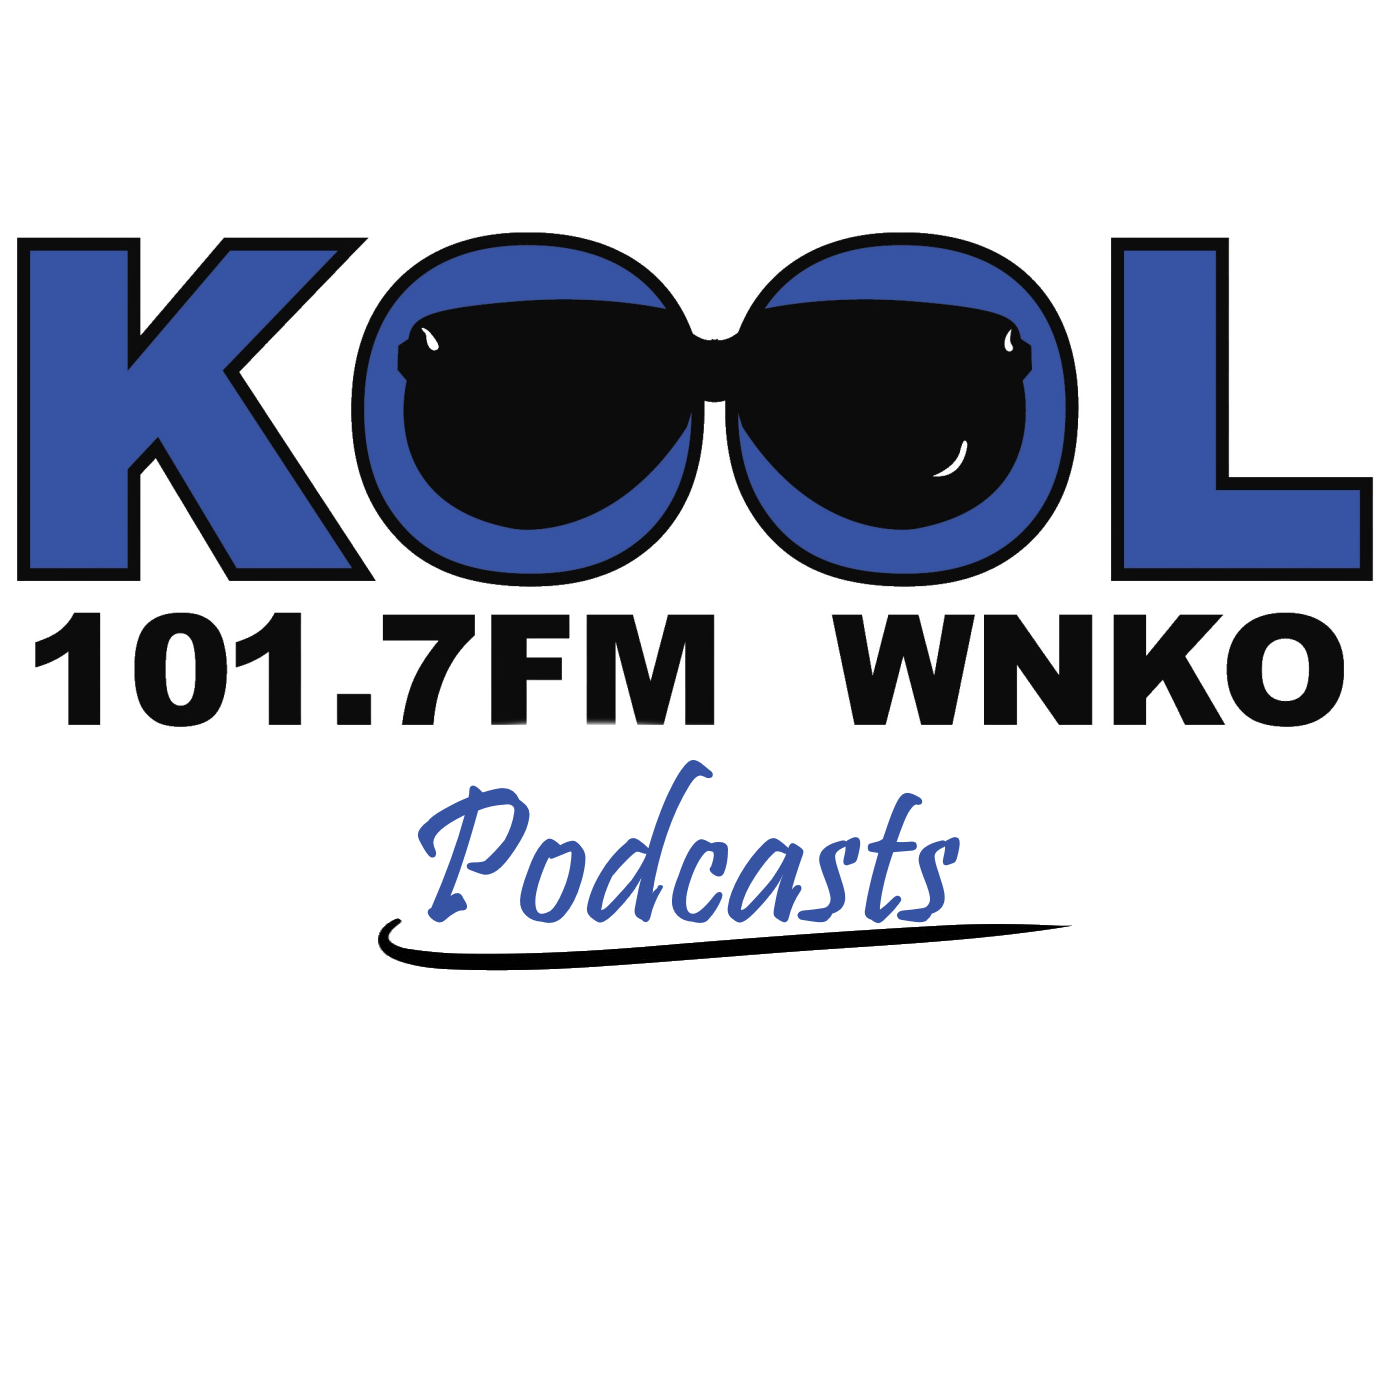 WNKO Podcasts